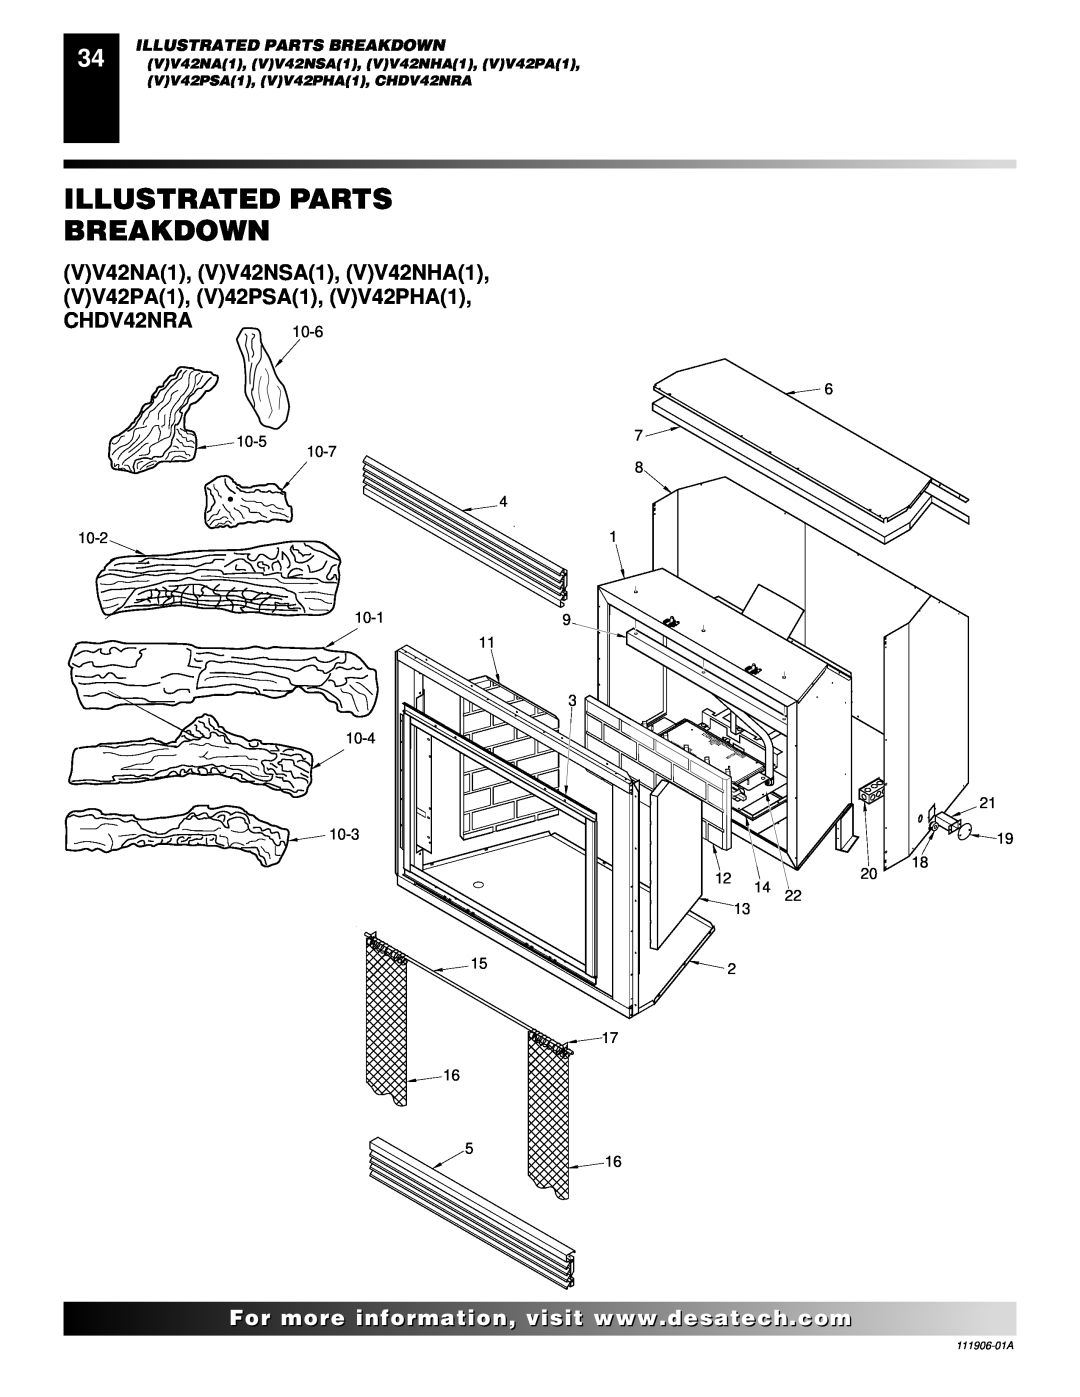 Desa (V)V42NA(1) installation manual Illustrated Parts Breakdown, CHDV42NRA 